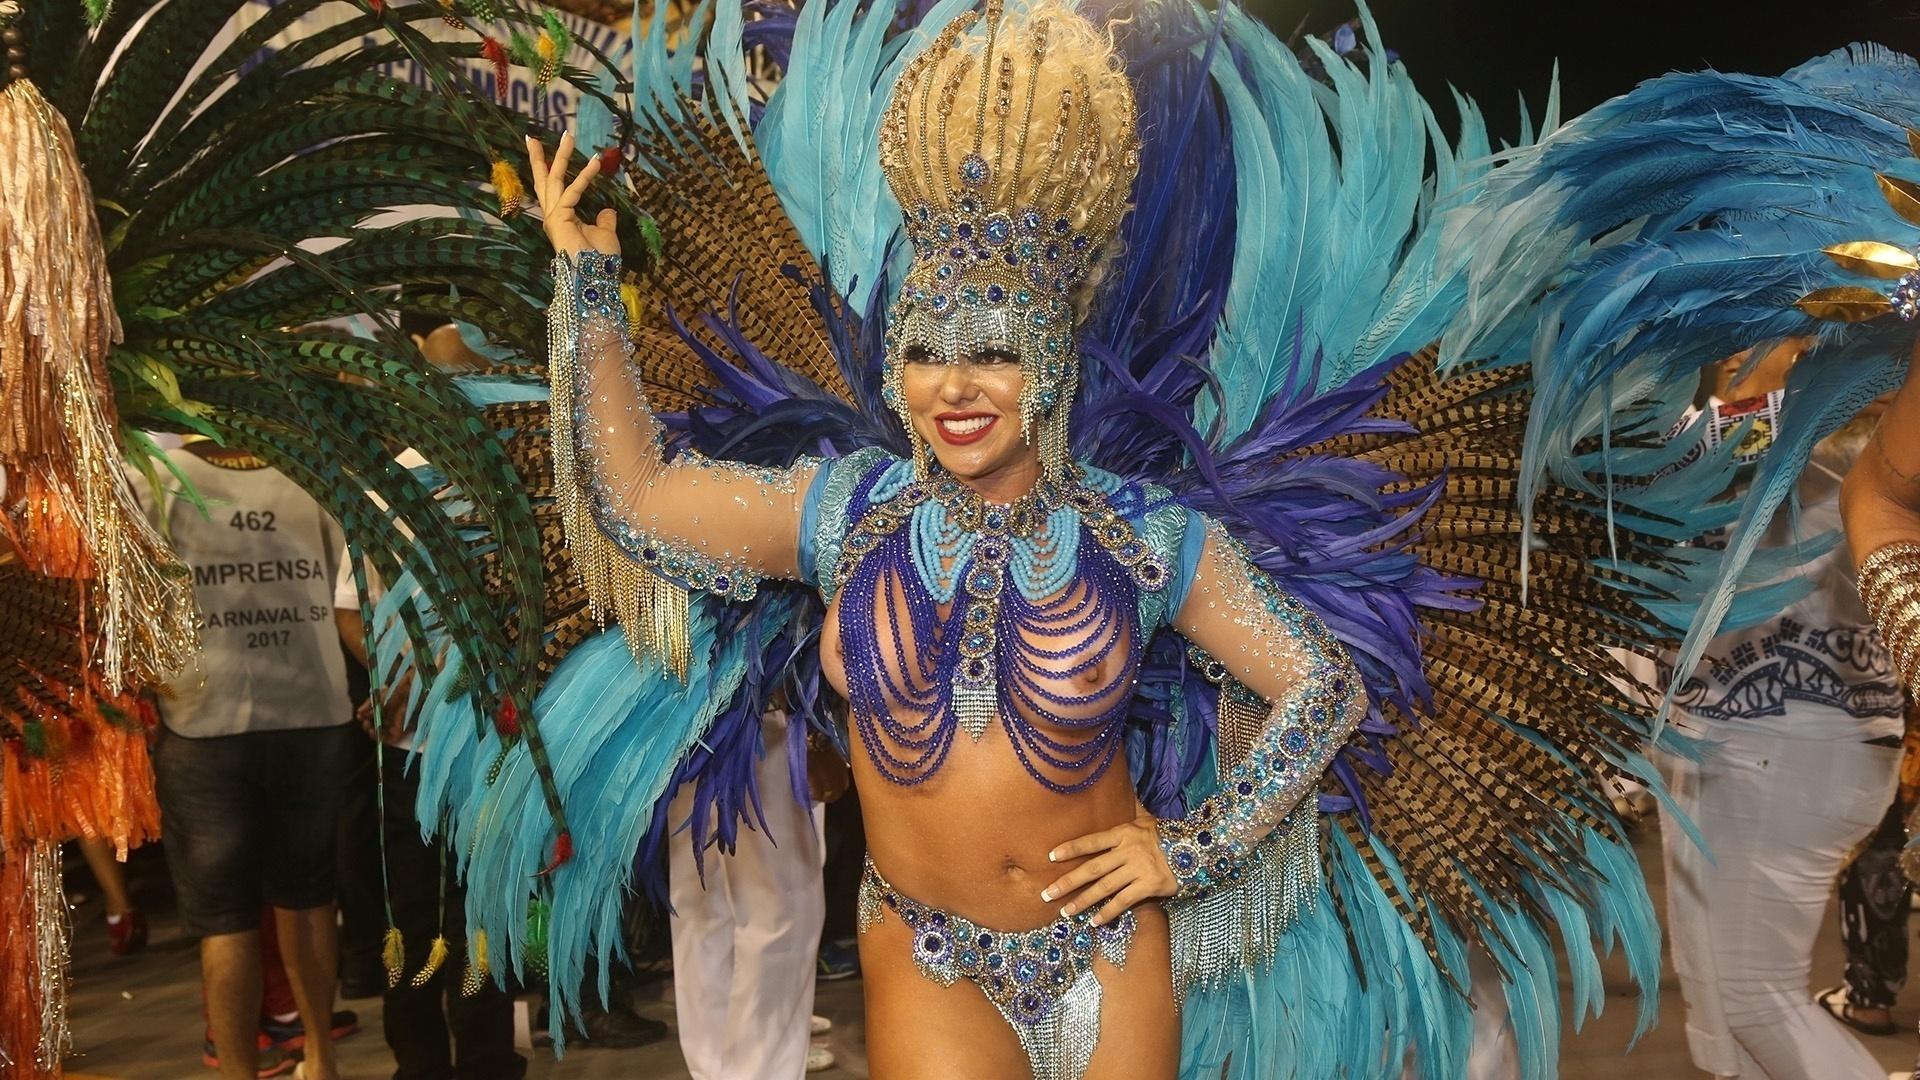 Мама карнавала. Андреа Мартинс Бразилия карнавал. Бразильский карнавал в Рио-де-Жанейро.